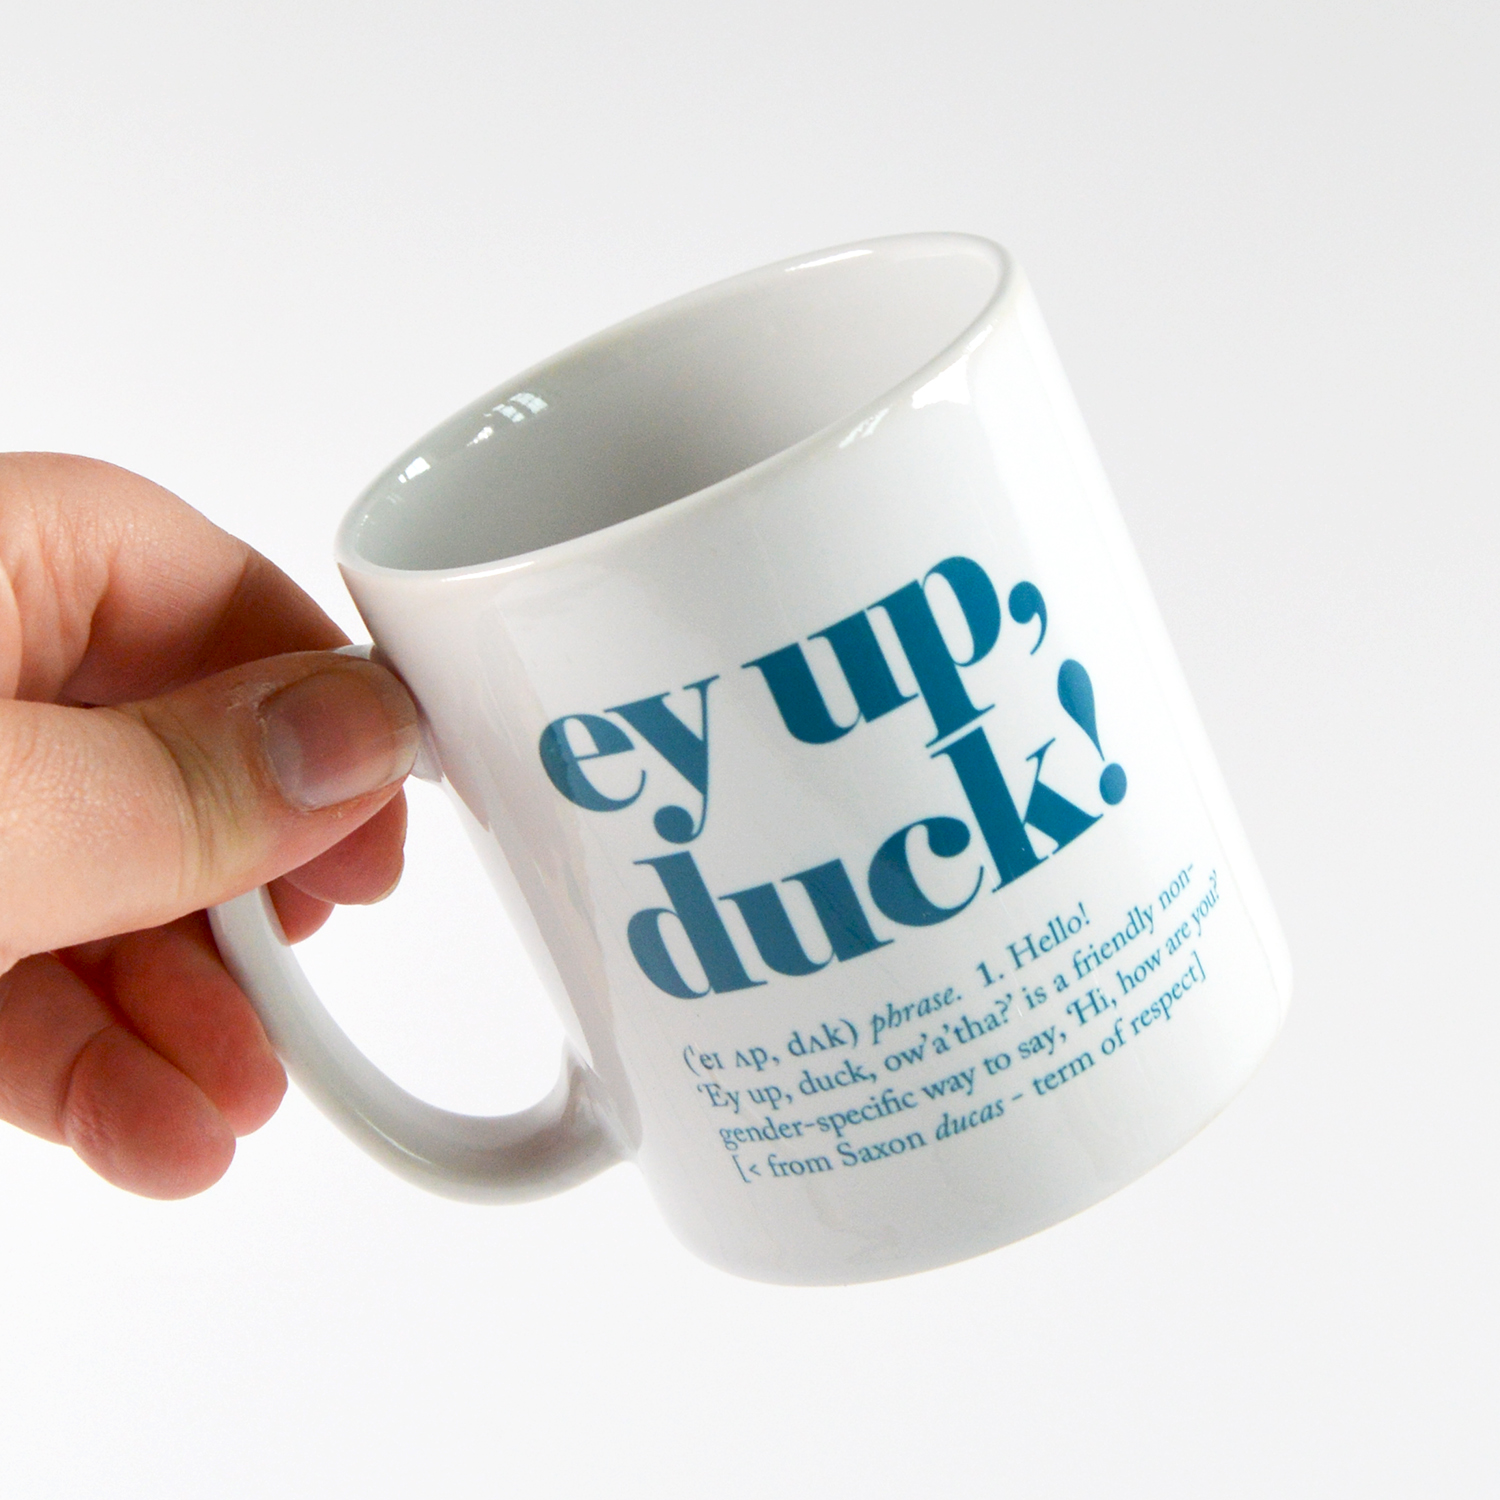 ey_up_duck_mug2